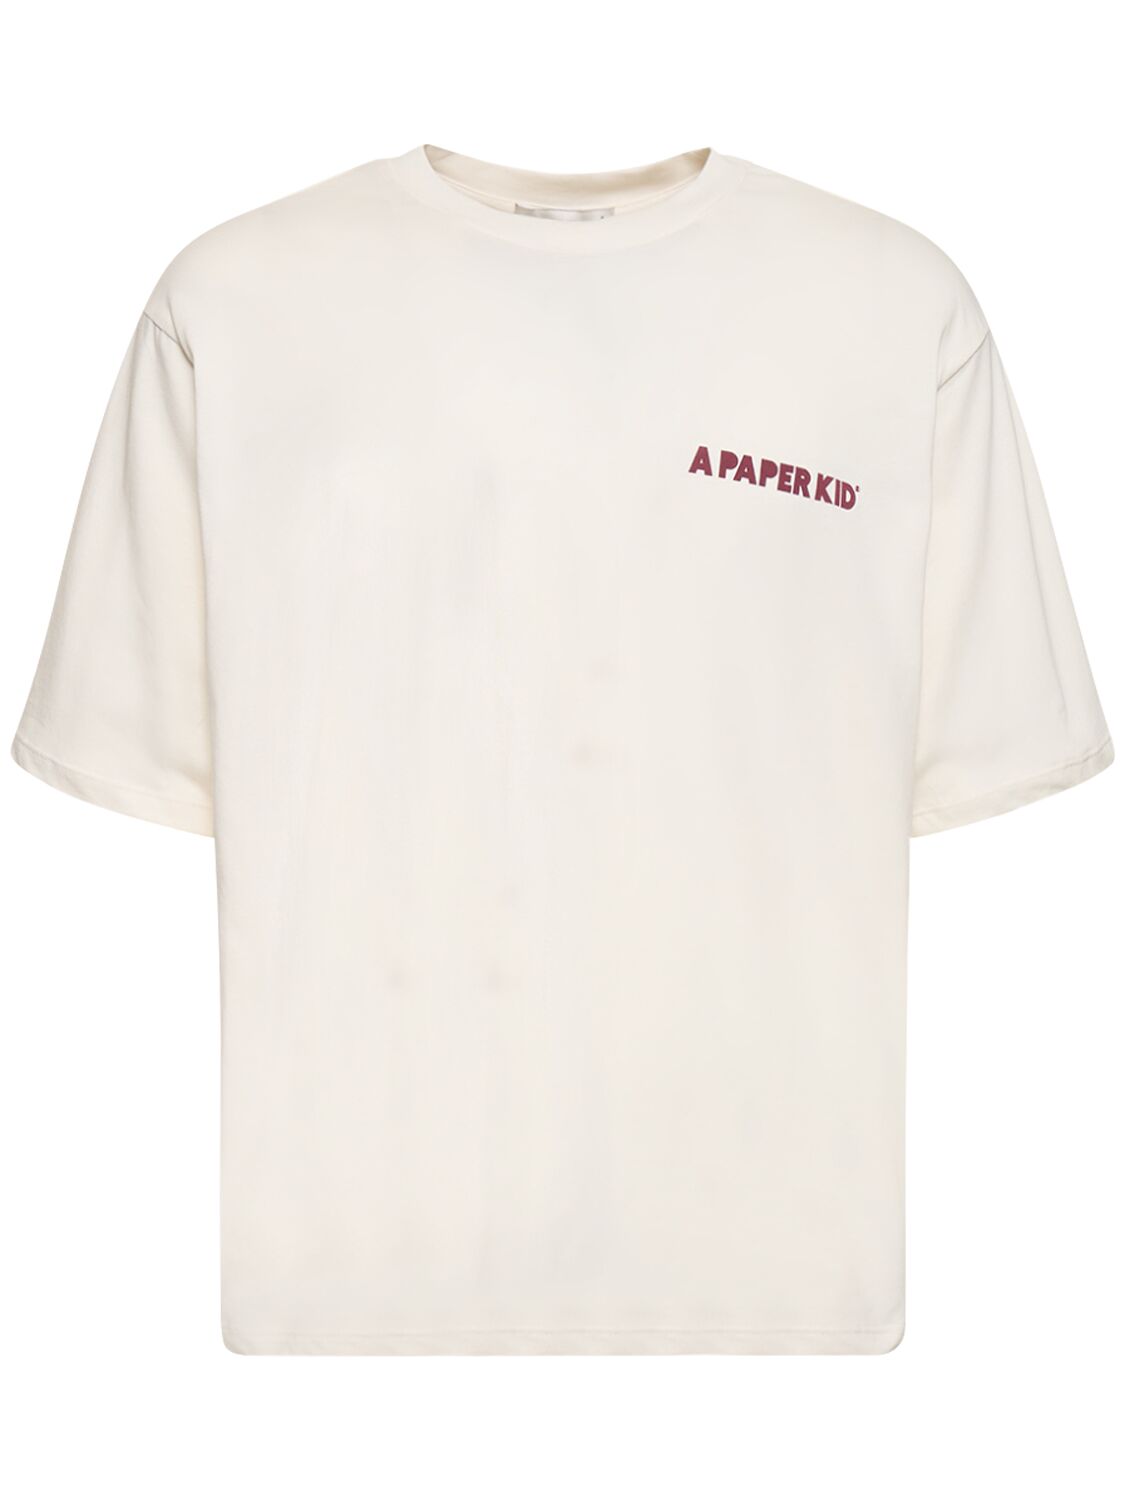 A Paper Kid Unisex T-shirt In Crema